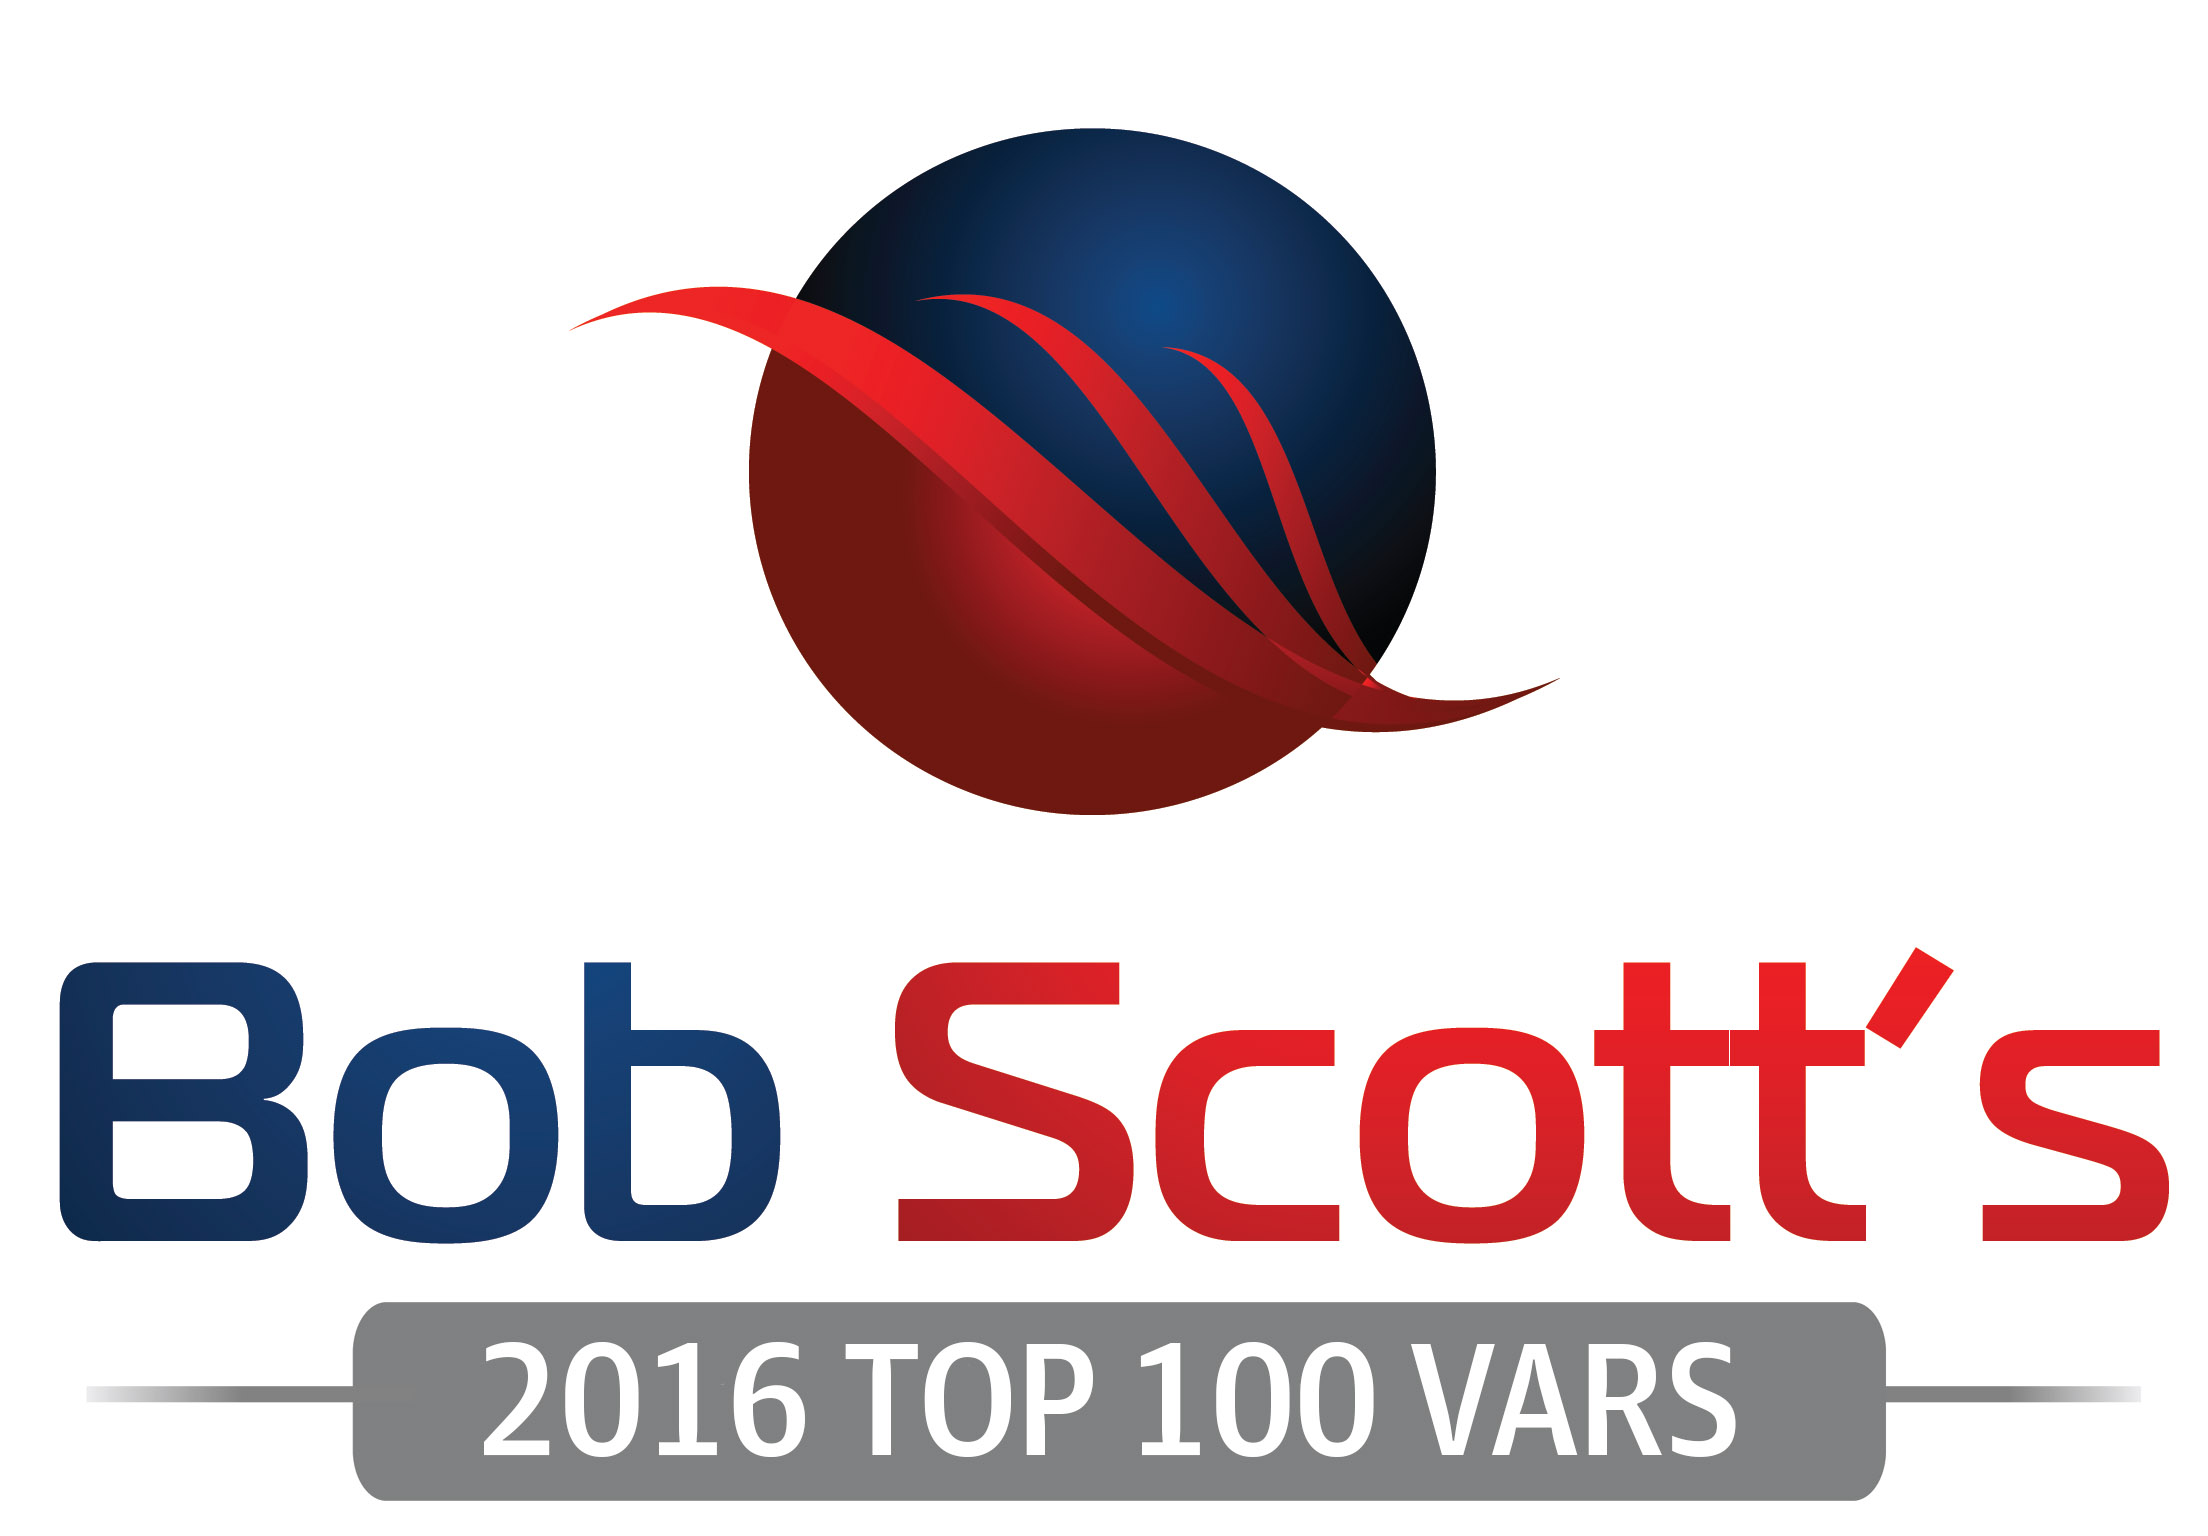 Bob Scott's Insights Top 100 VARs